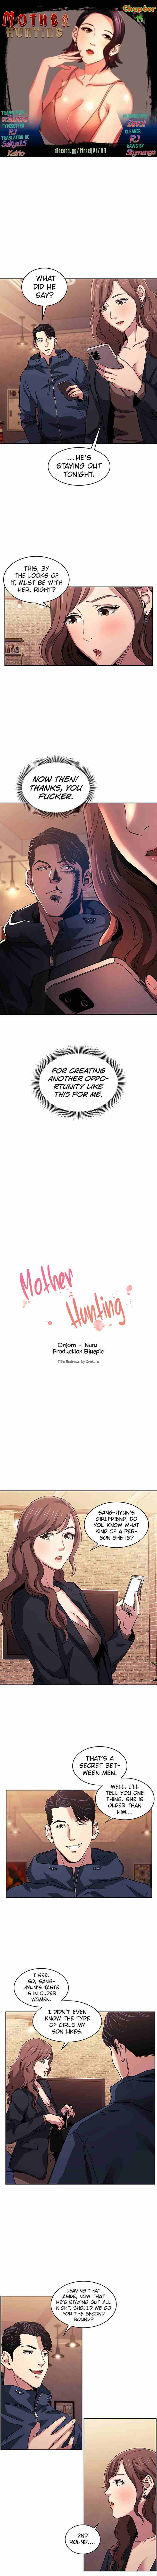 Mother Hunting [OUM, Naru] Ch.30? [English] [Manhwa PDF]